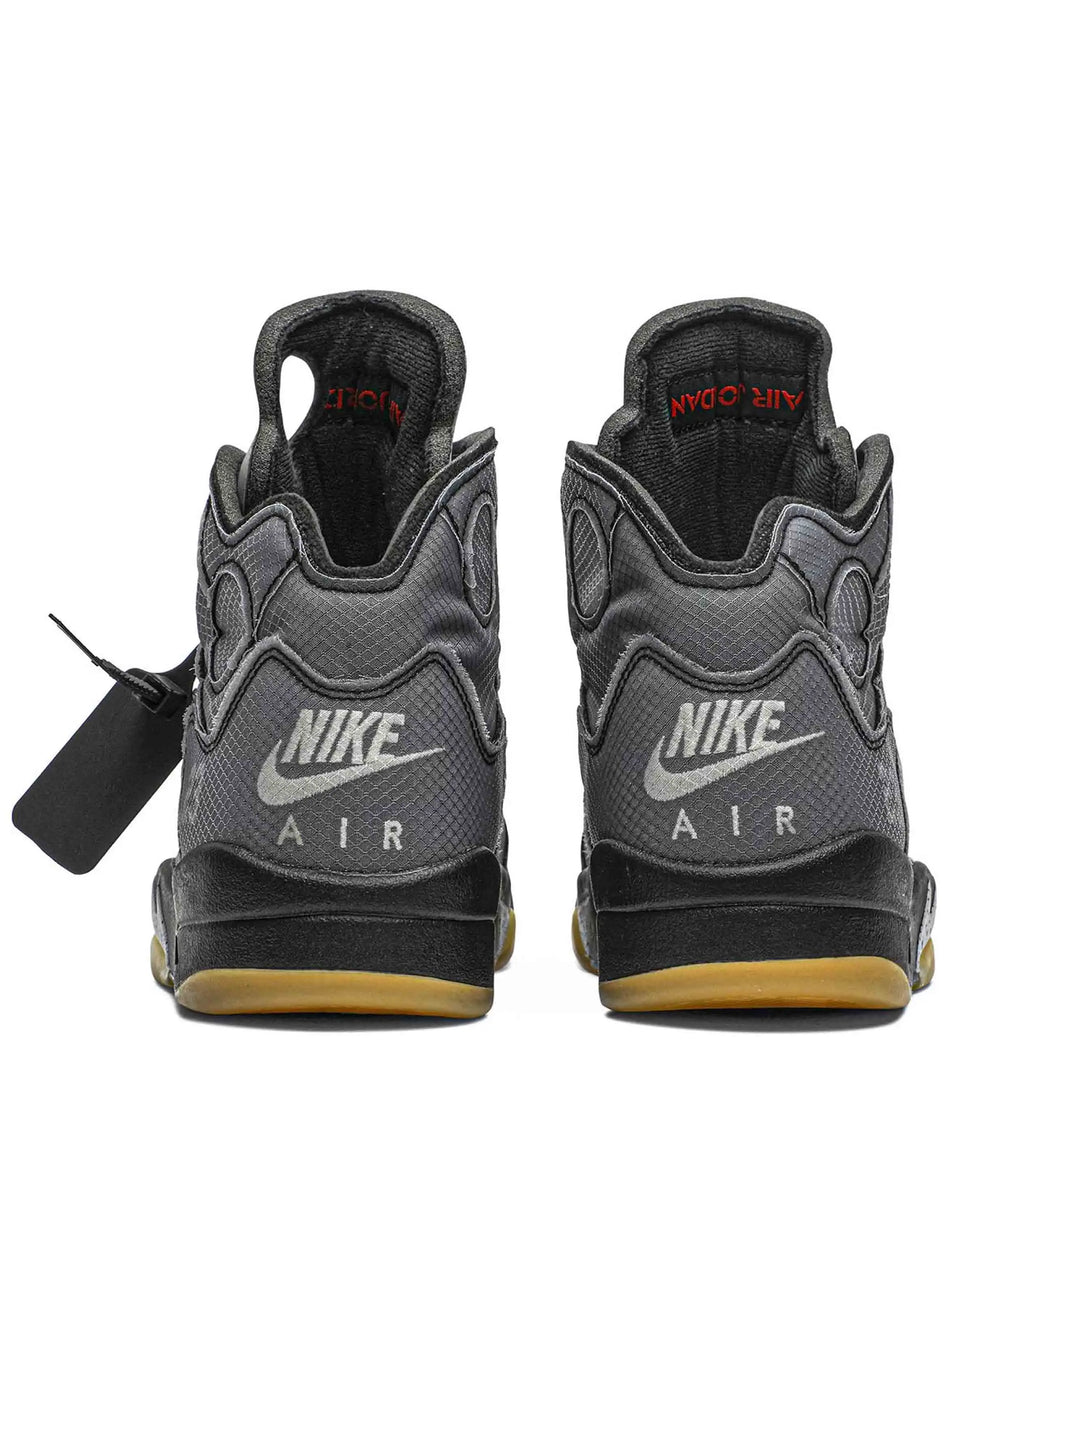 Nike Air Jordan 5 Retro Off White Black Prior